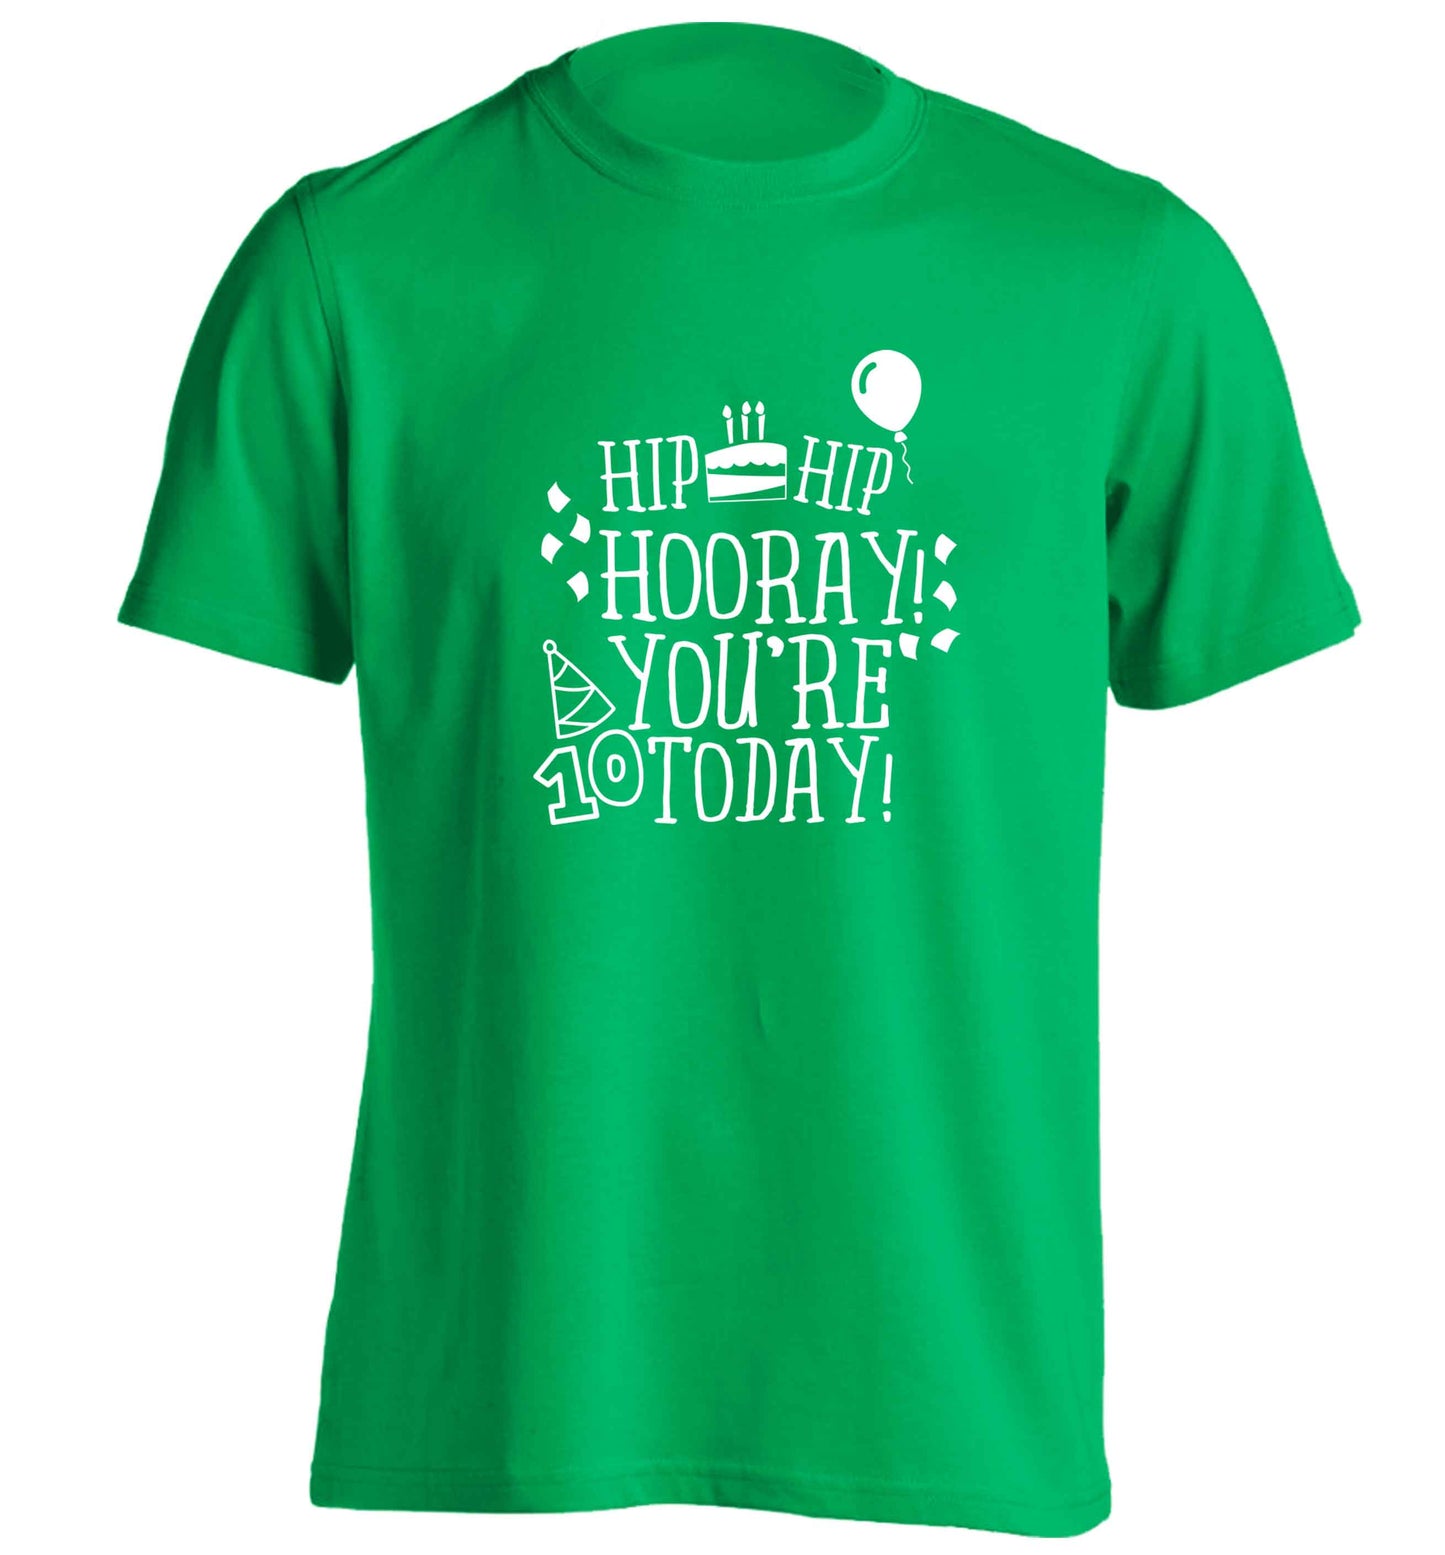 Hip hip hooray you're ten today! adults unisex green Tshirt 2XL